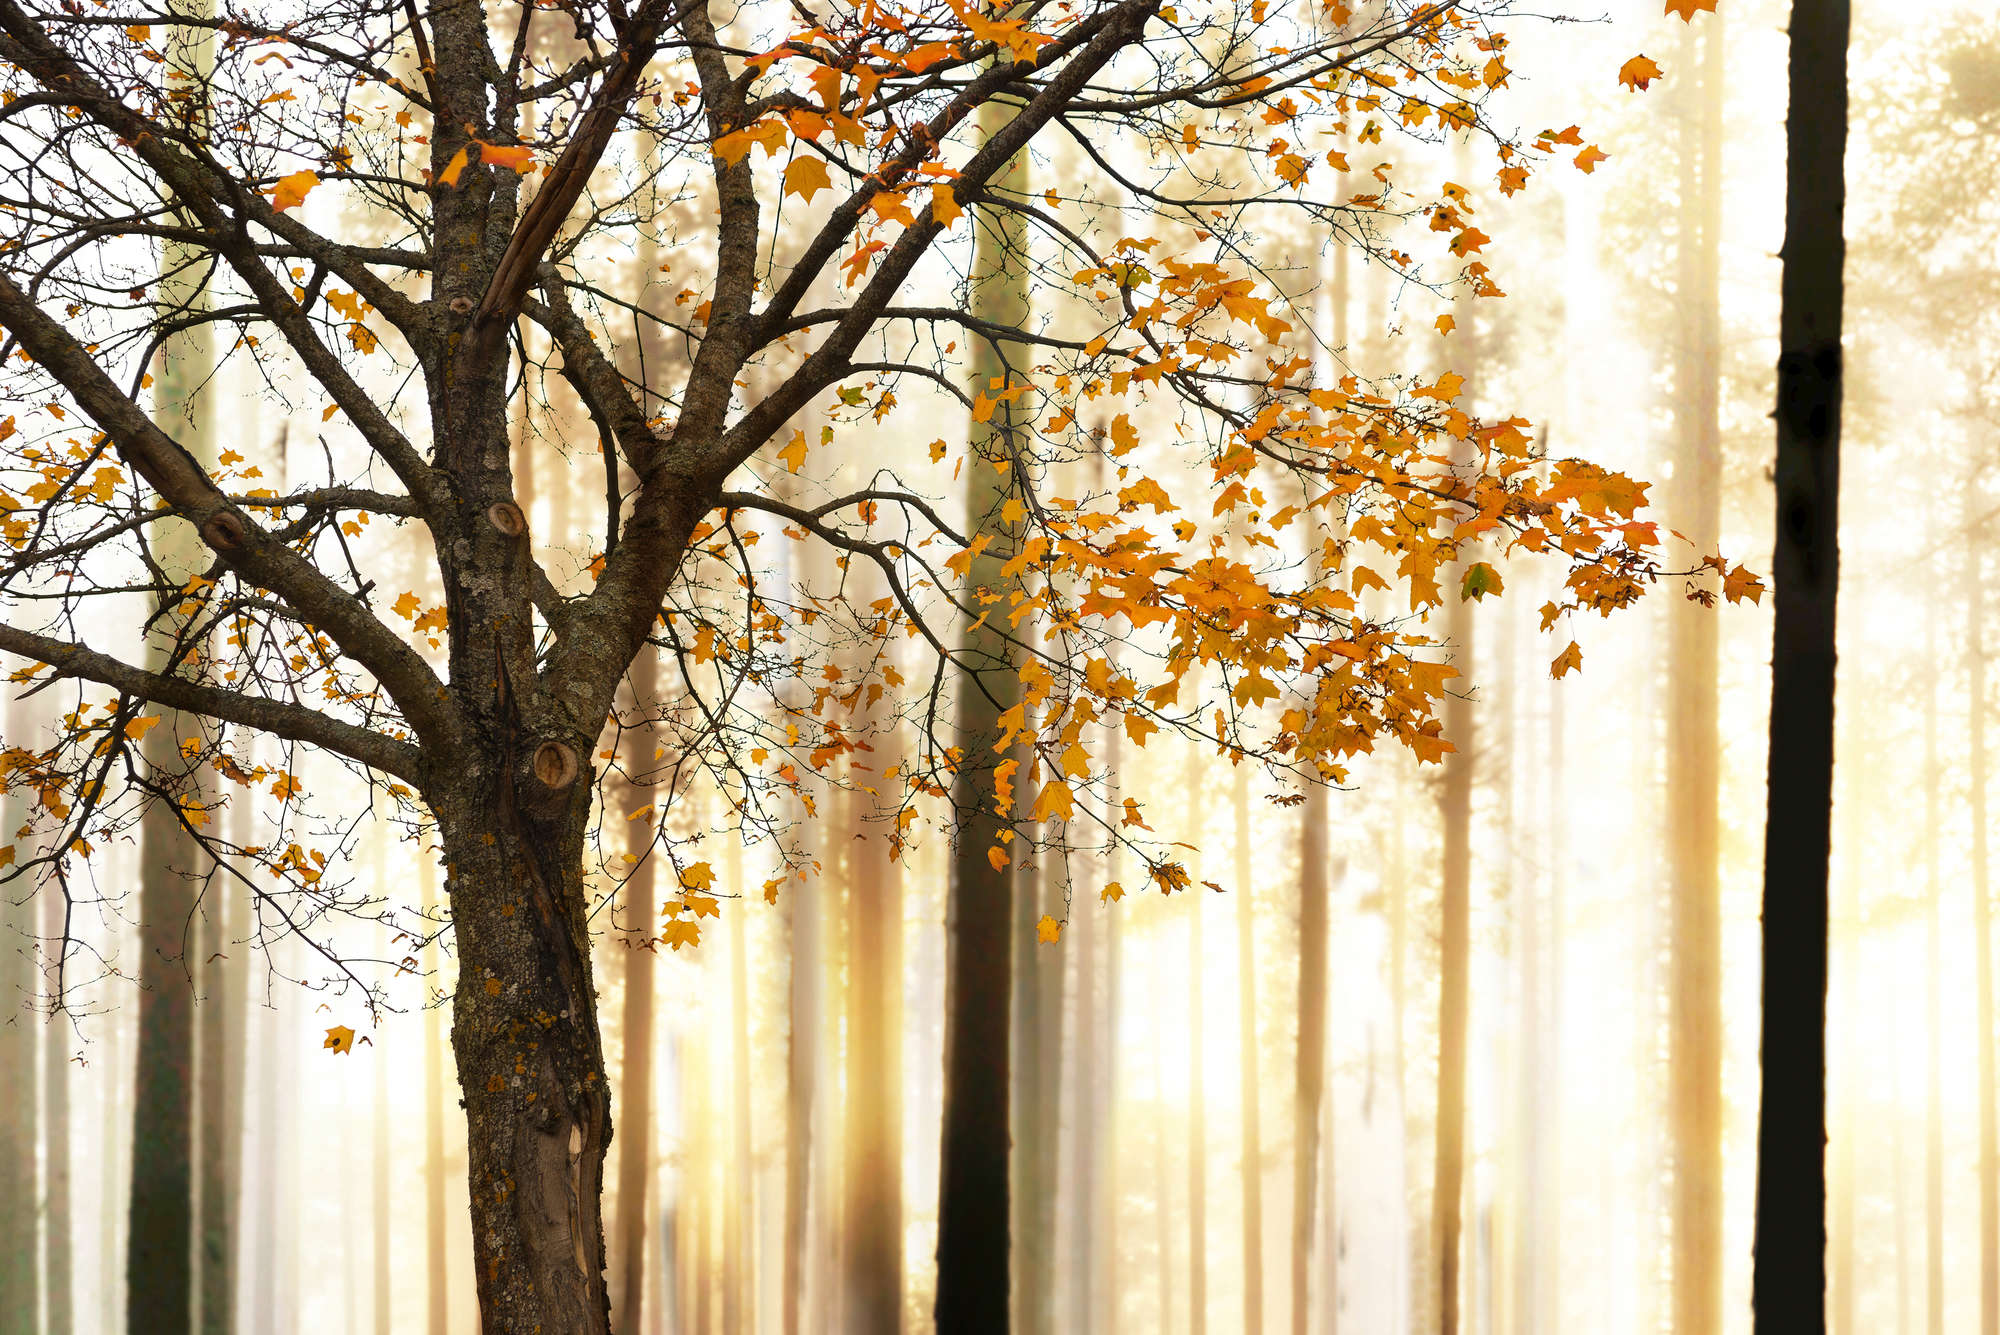             Natuurbehang herfstbosmotief op parelmoer glad vlies
        